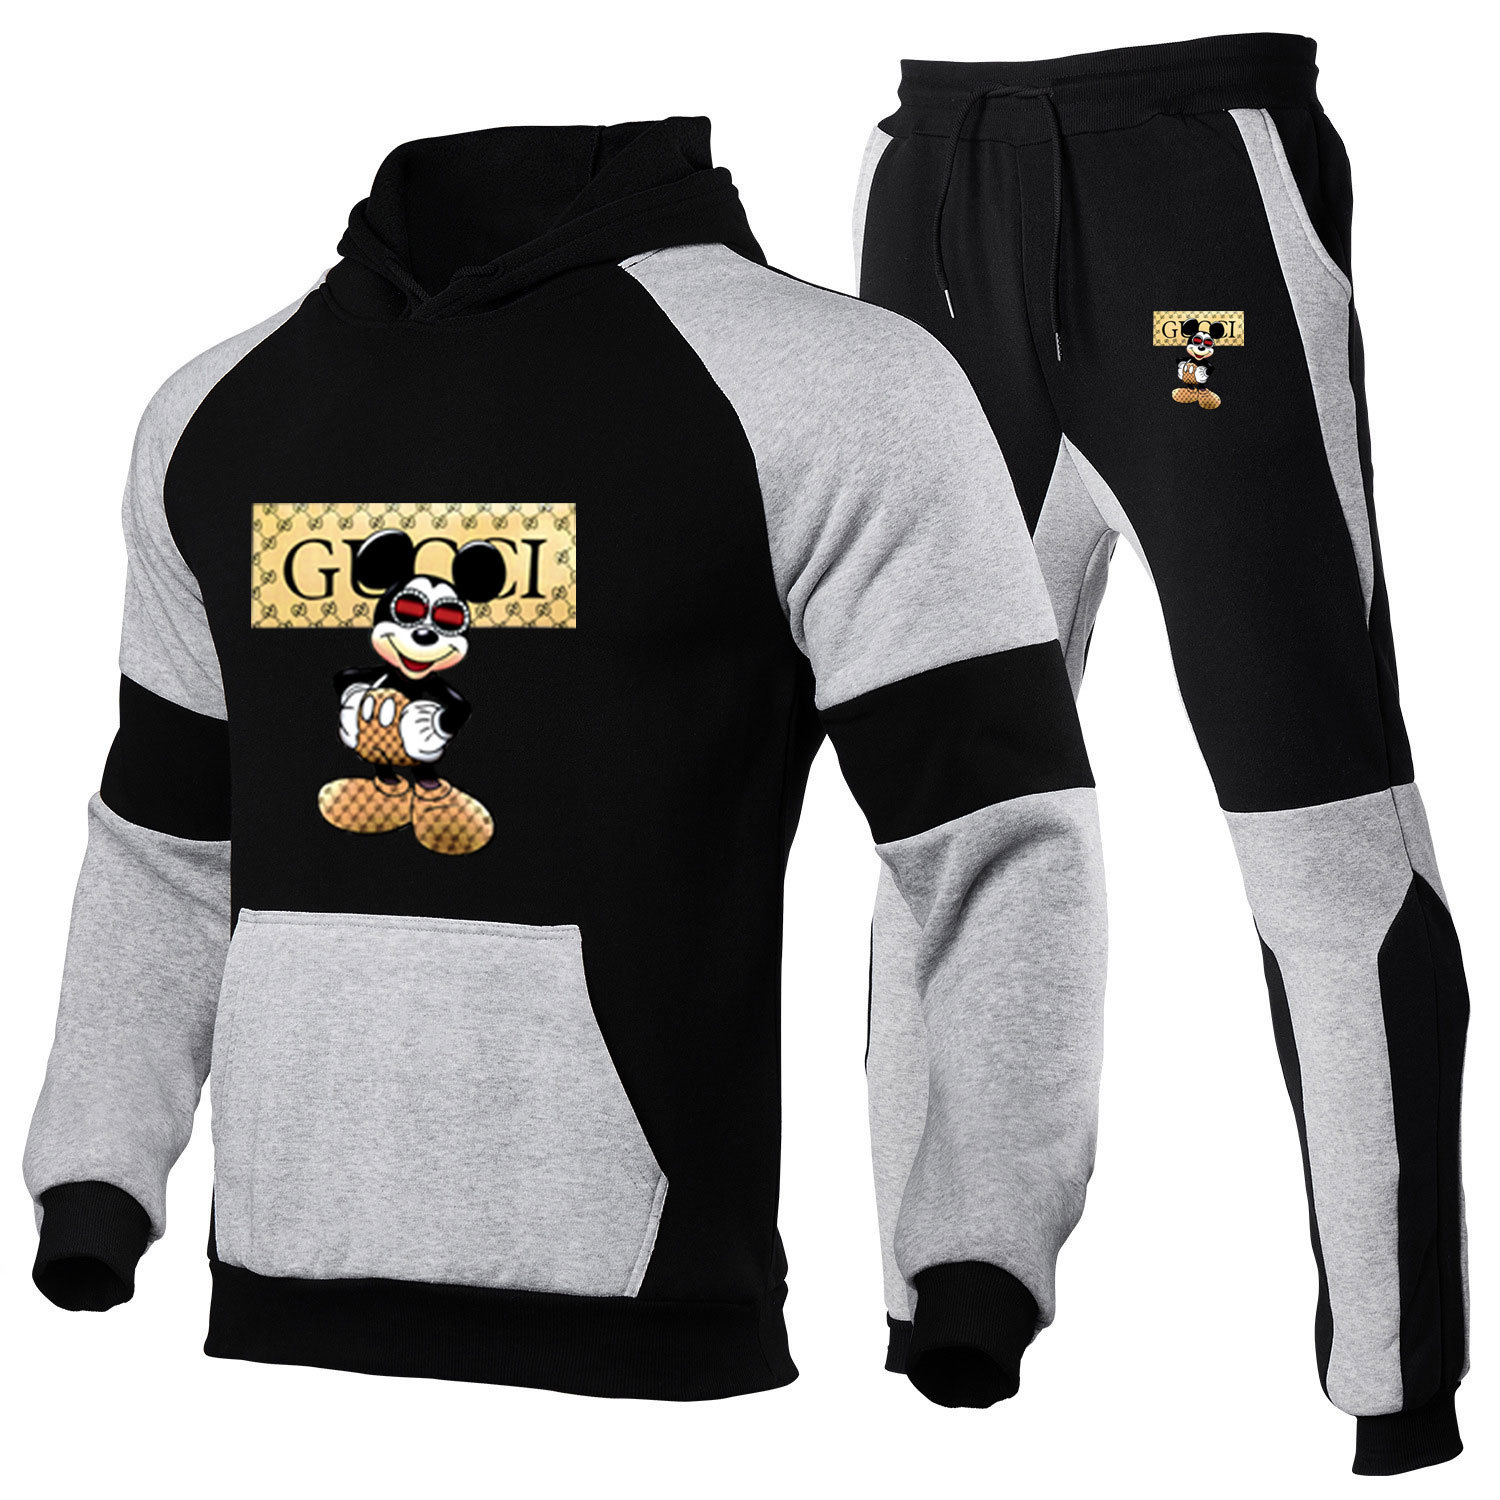 

Designer Brand Men Casual Tracksuit Hoodies Pant Two Piece Sets Fashion Hooded Sweatshirt Sportswear Suit Clothing, 55